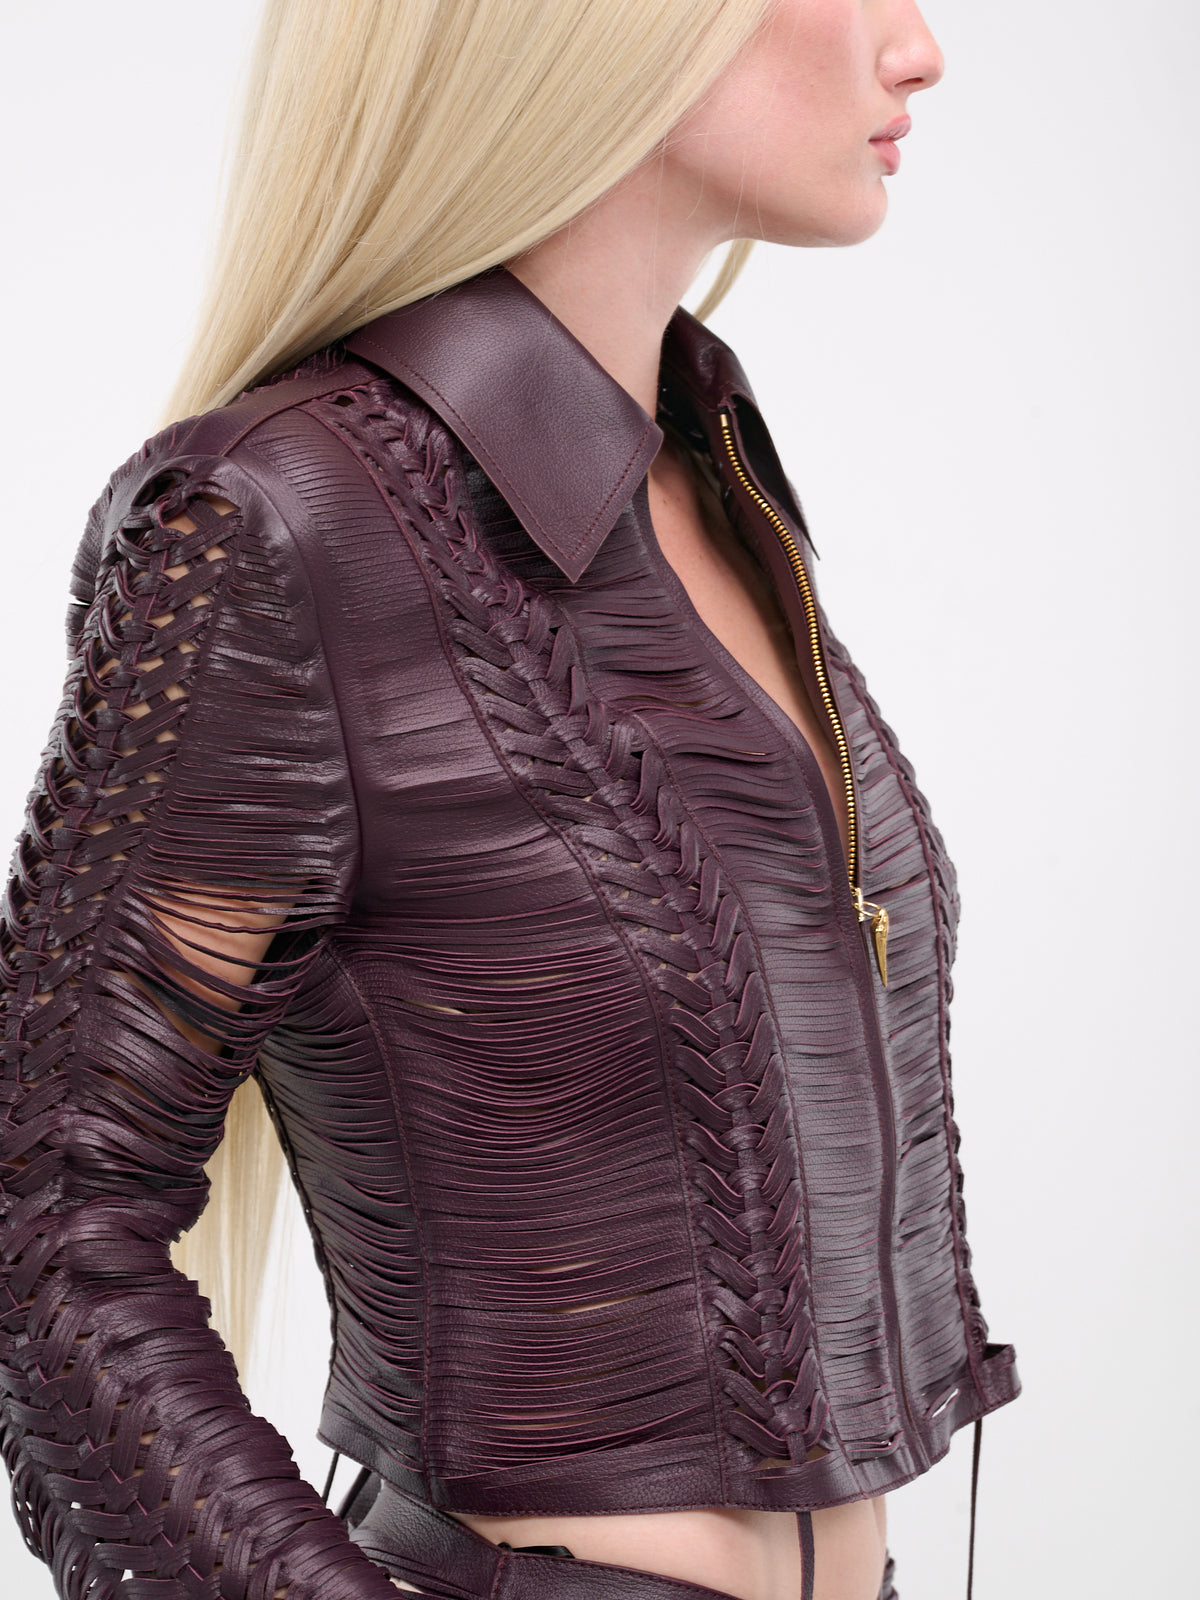 Leather Lace Jacket (SWP800-PN002-AUBERGINE)